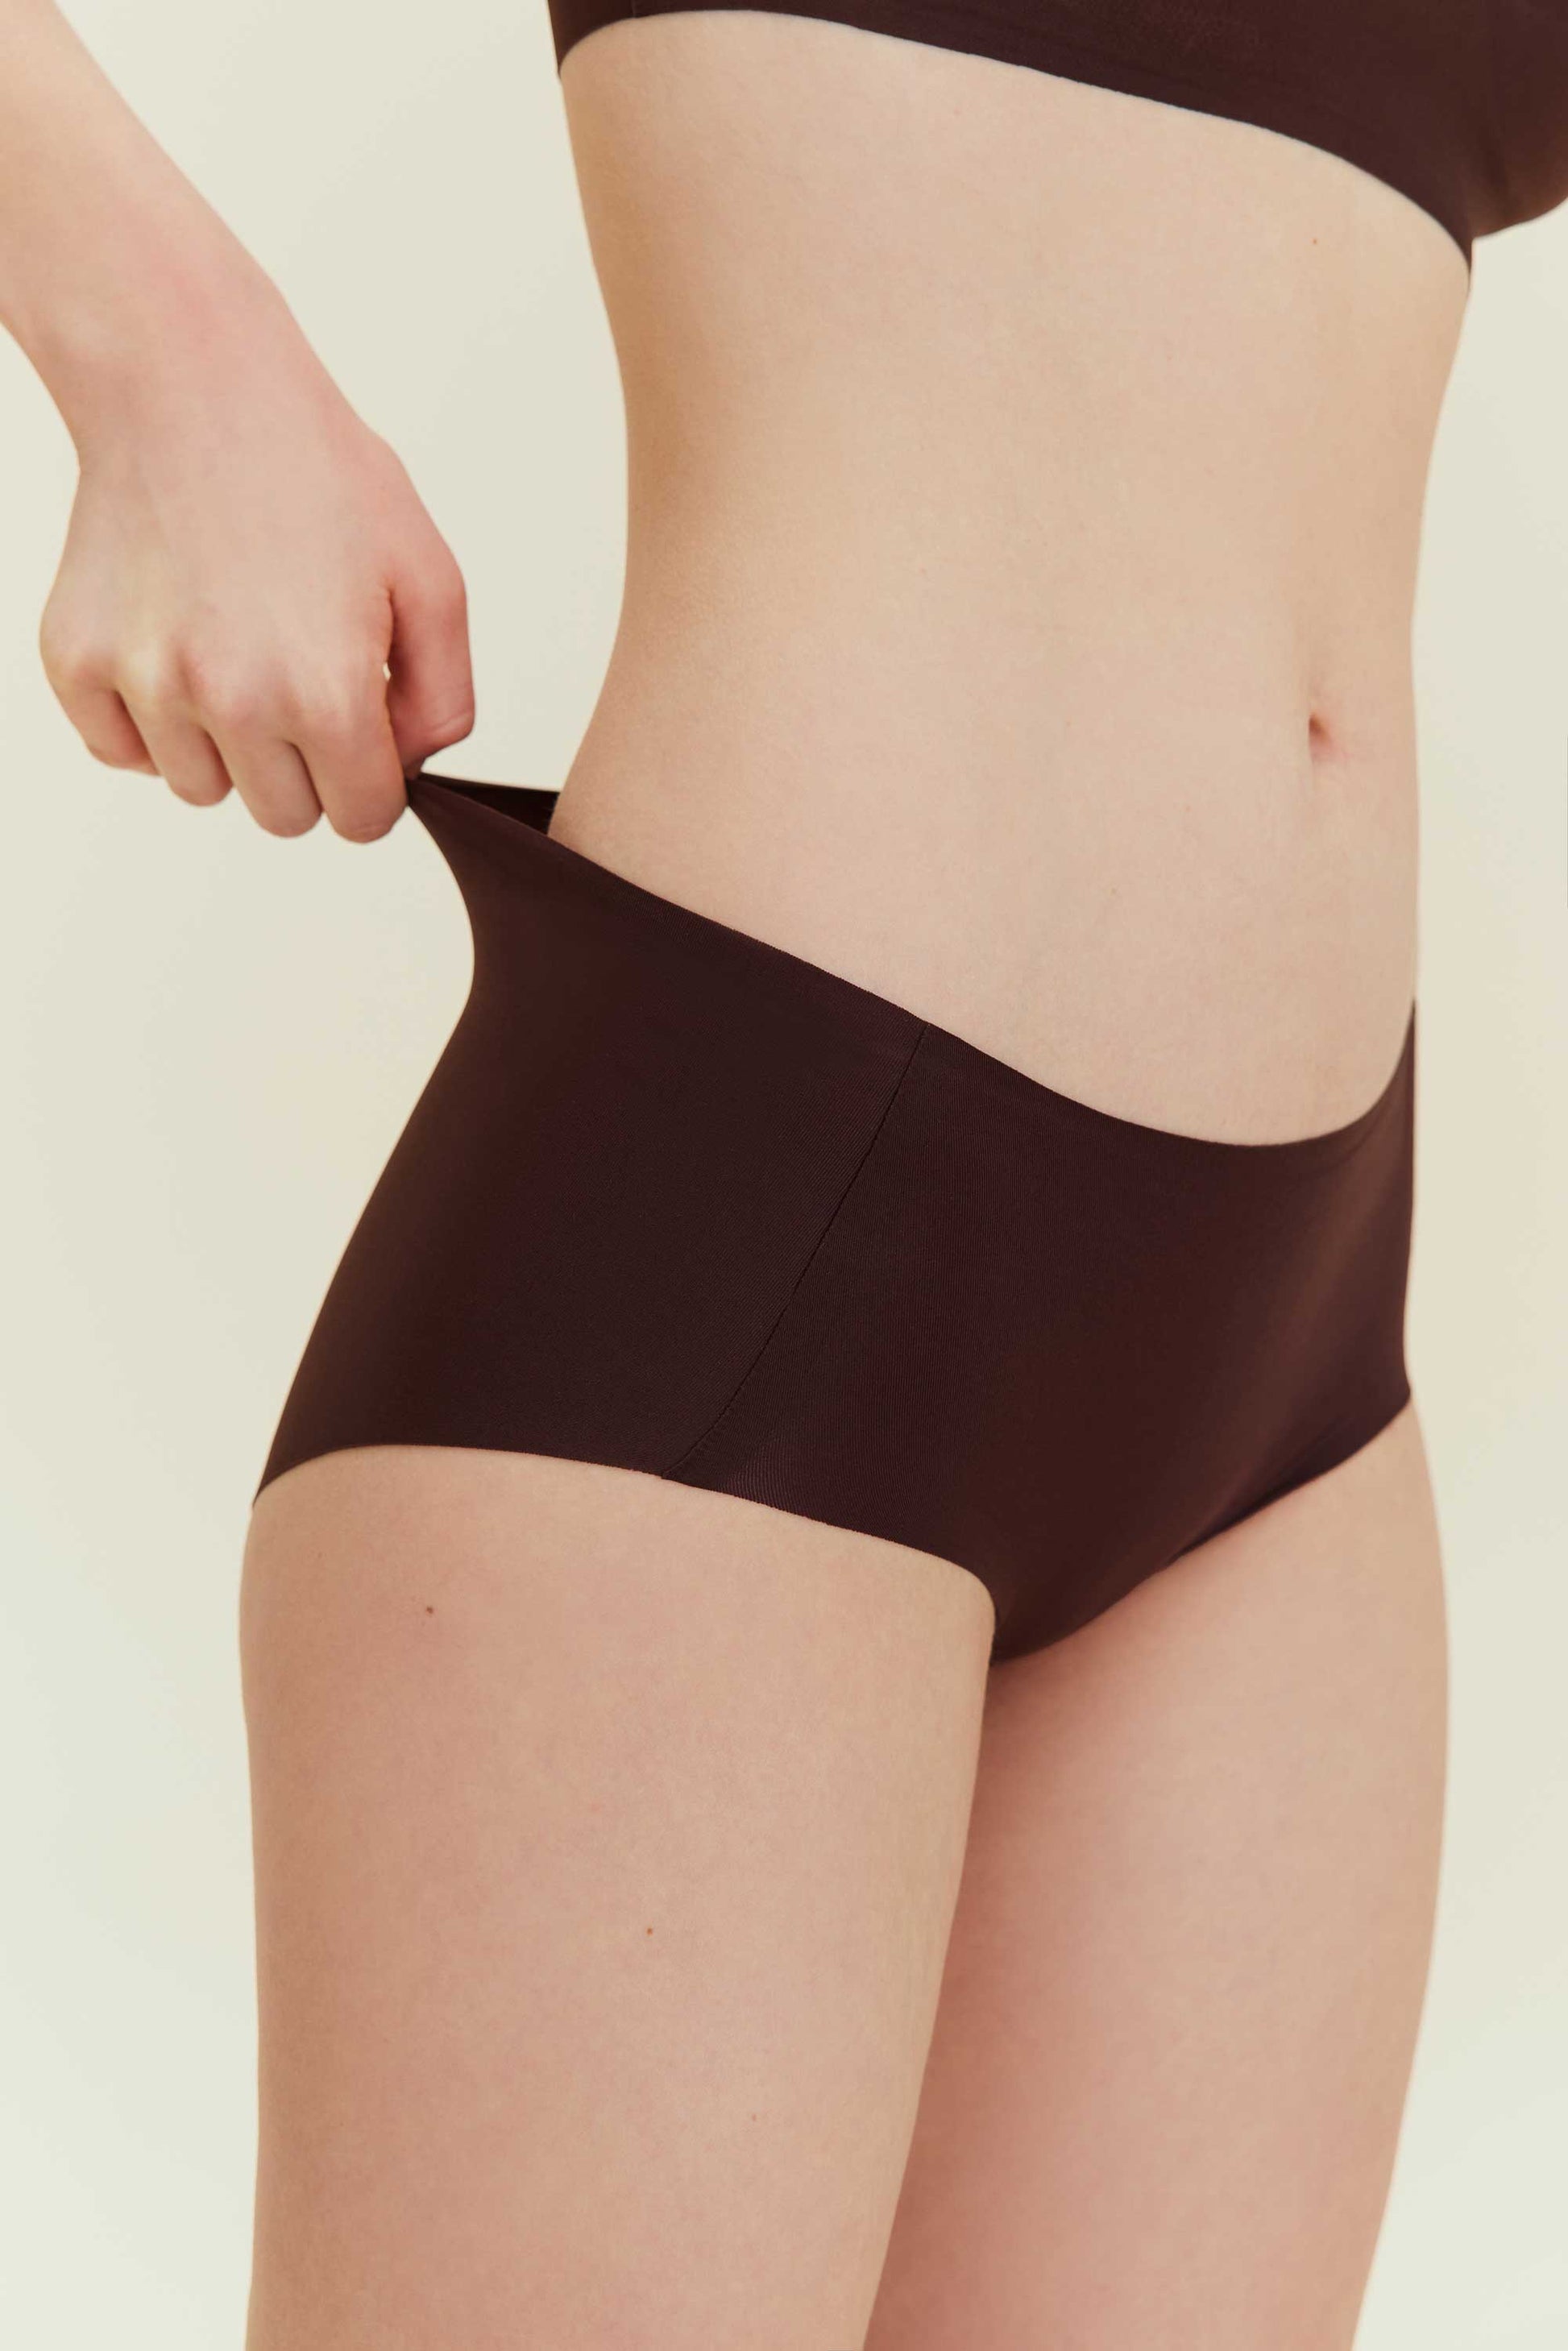 Underwear Brand NEIWAI Completes D Round of Financing orf $100